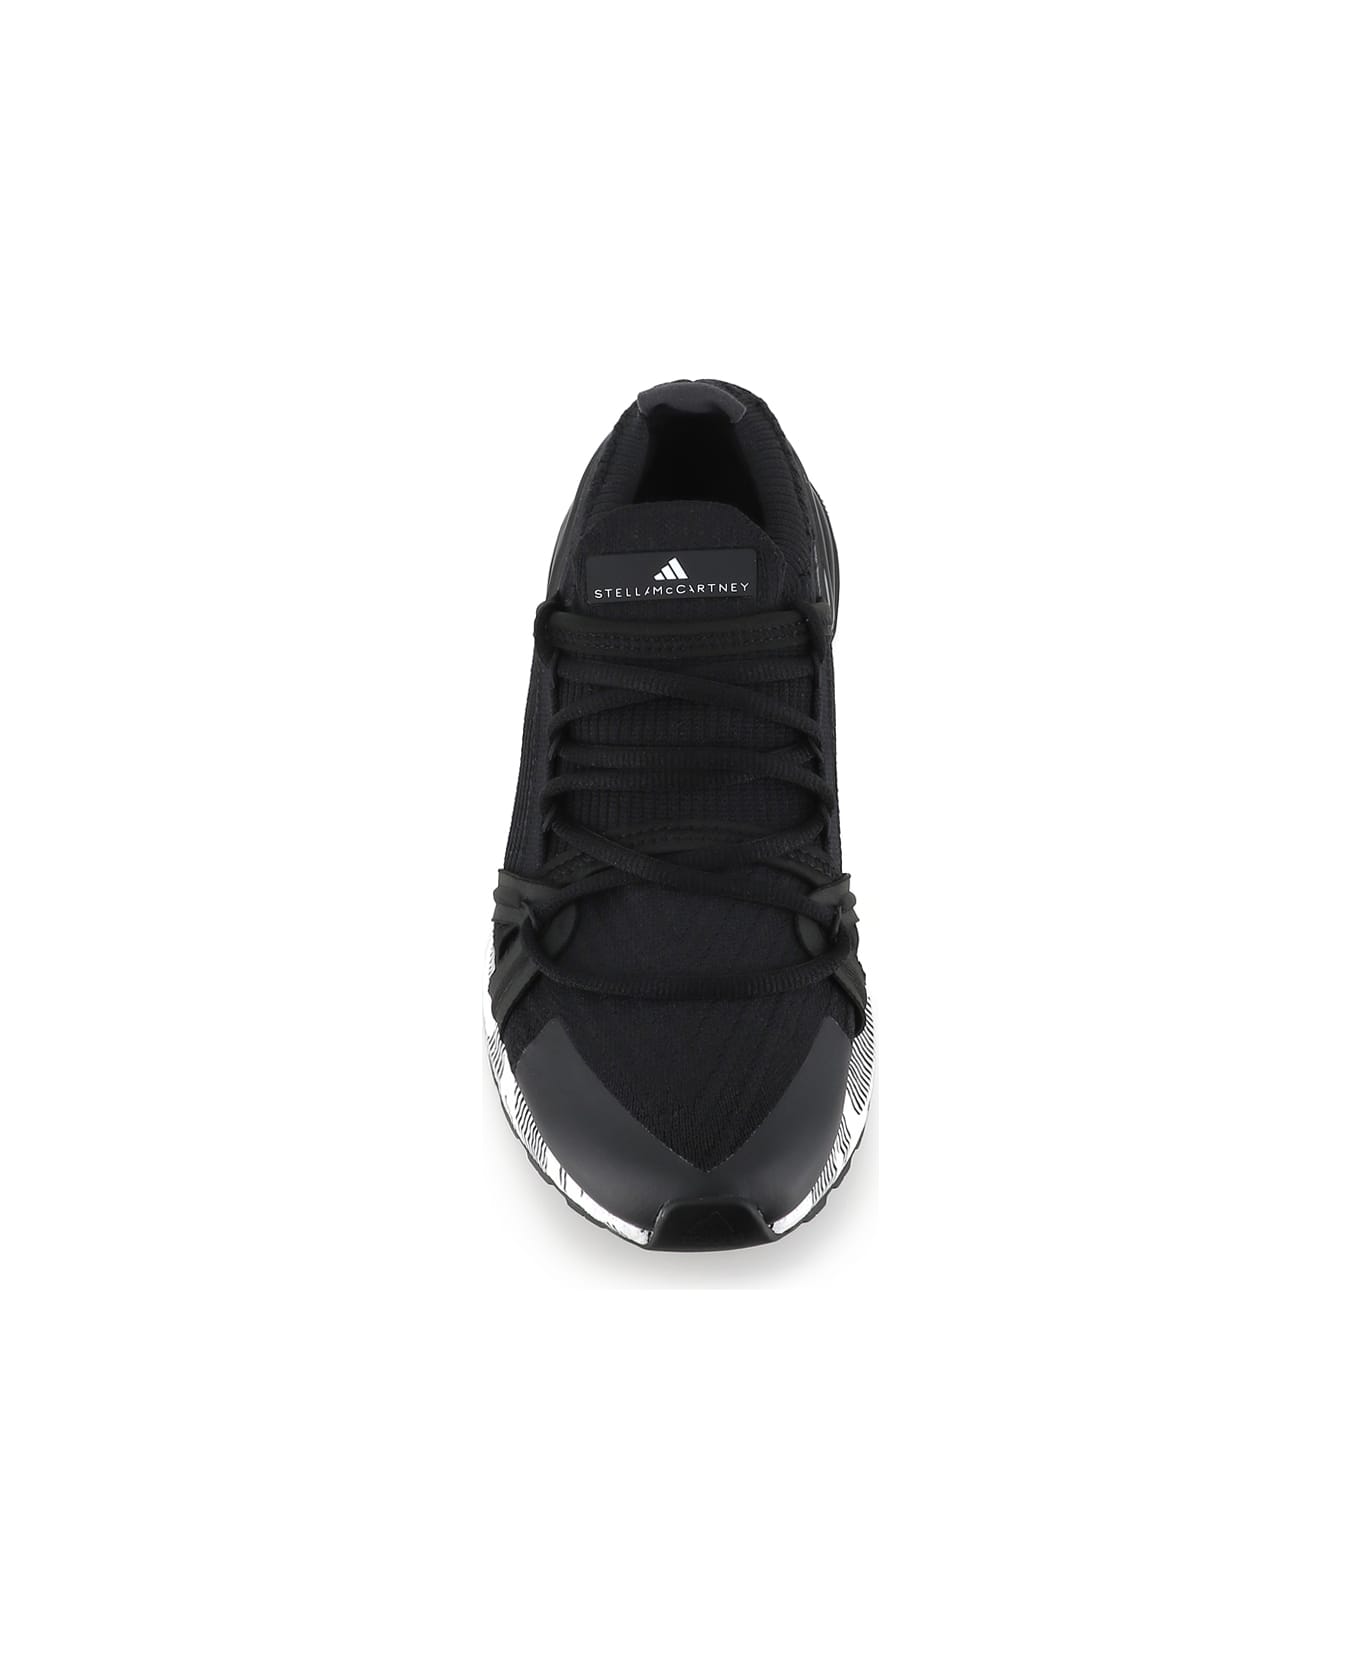 Adidas by Stella McCartney Ultraboost 20 Woman - Black/white スニーカー